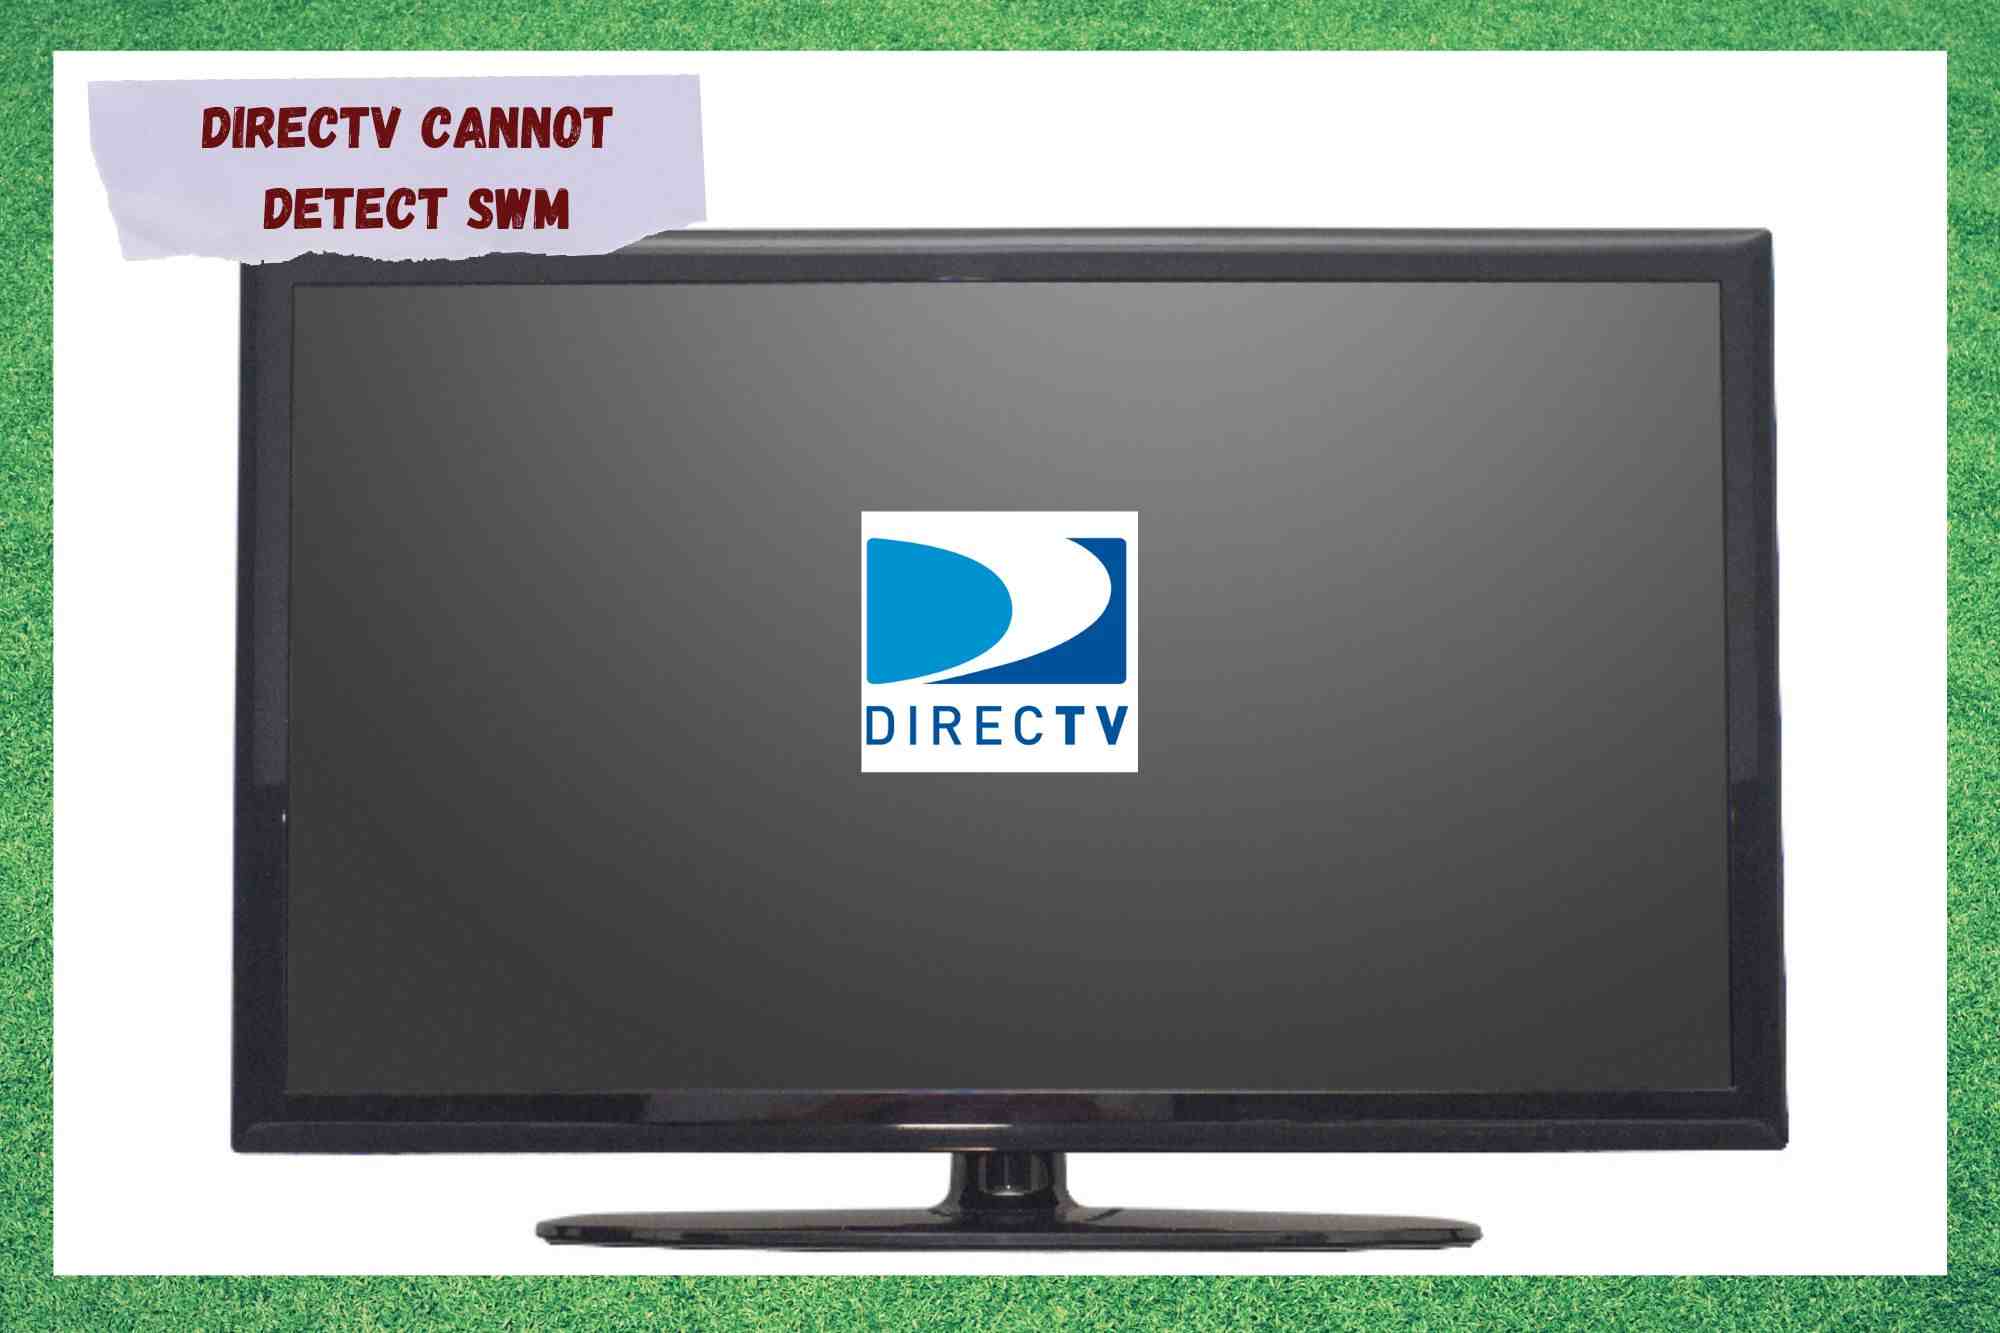 directv cannot detect swm